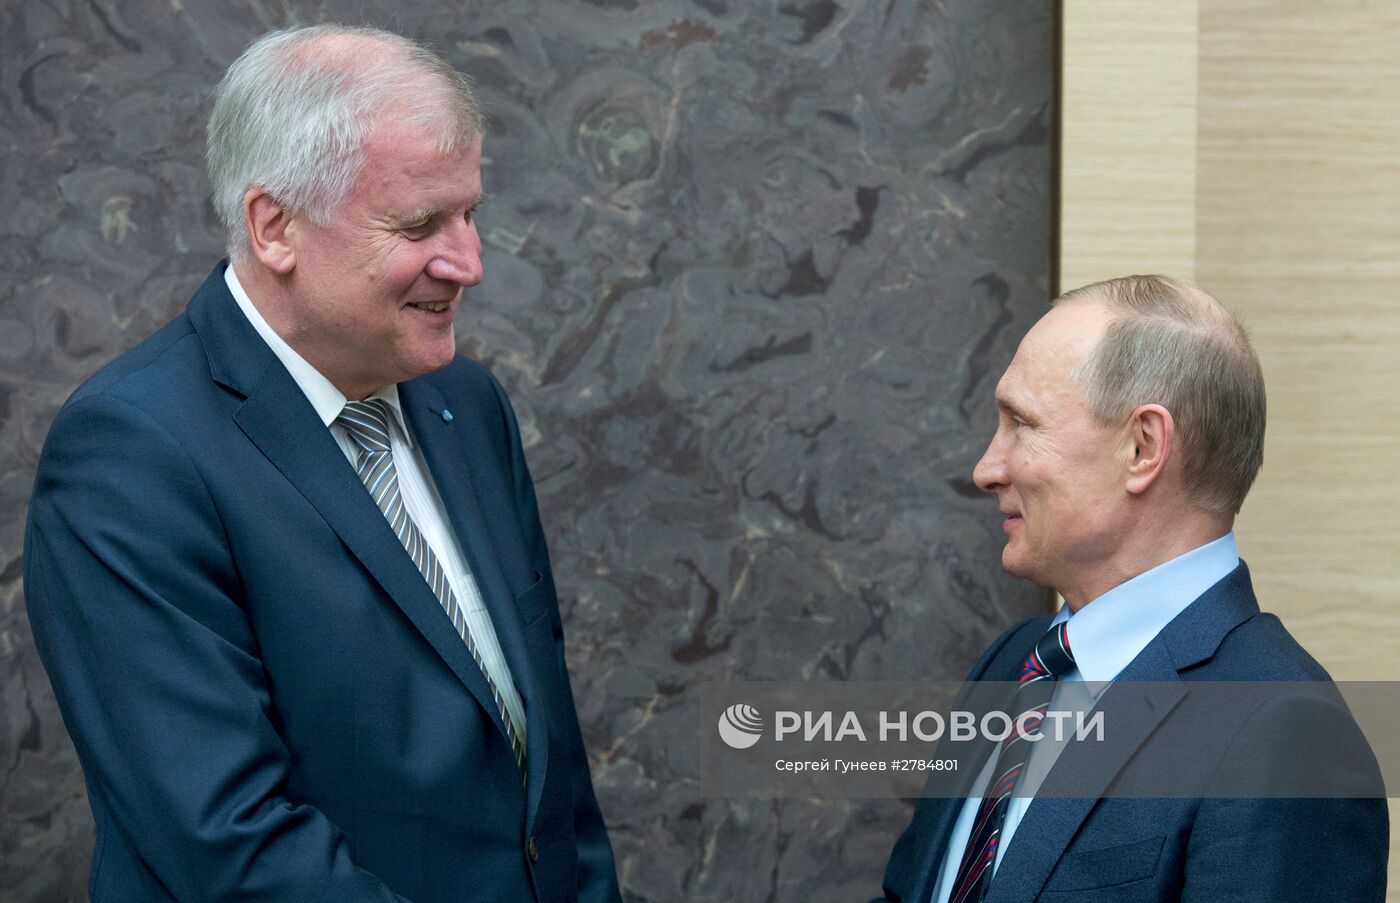 Президент РФ В. Путин встретился с премьер-министром Баварии Х. Зеехофером